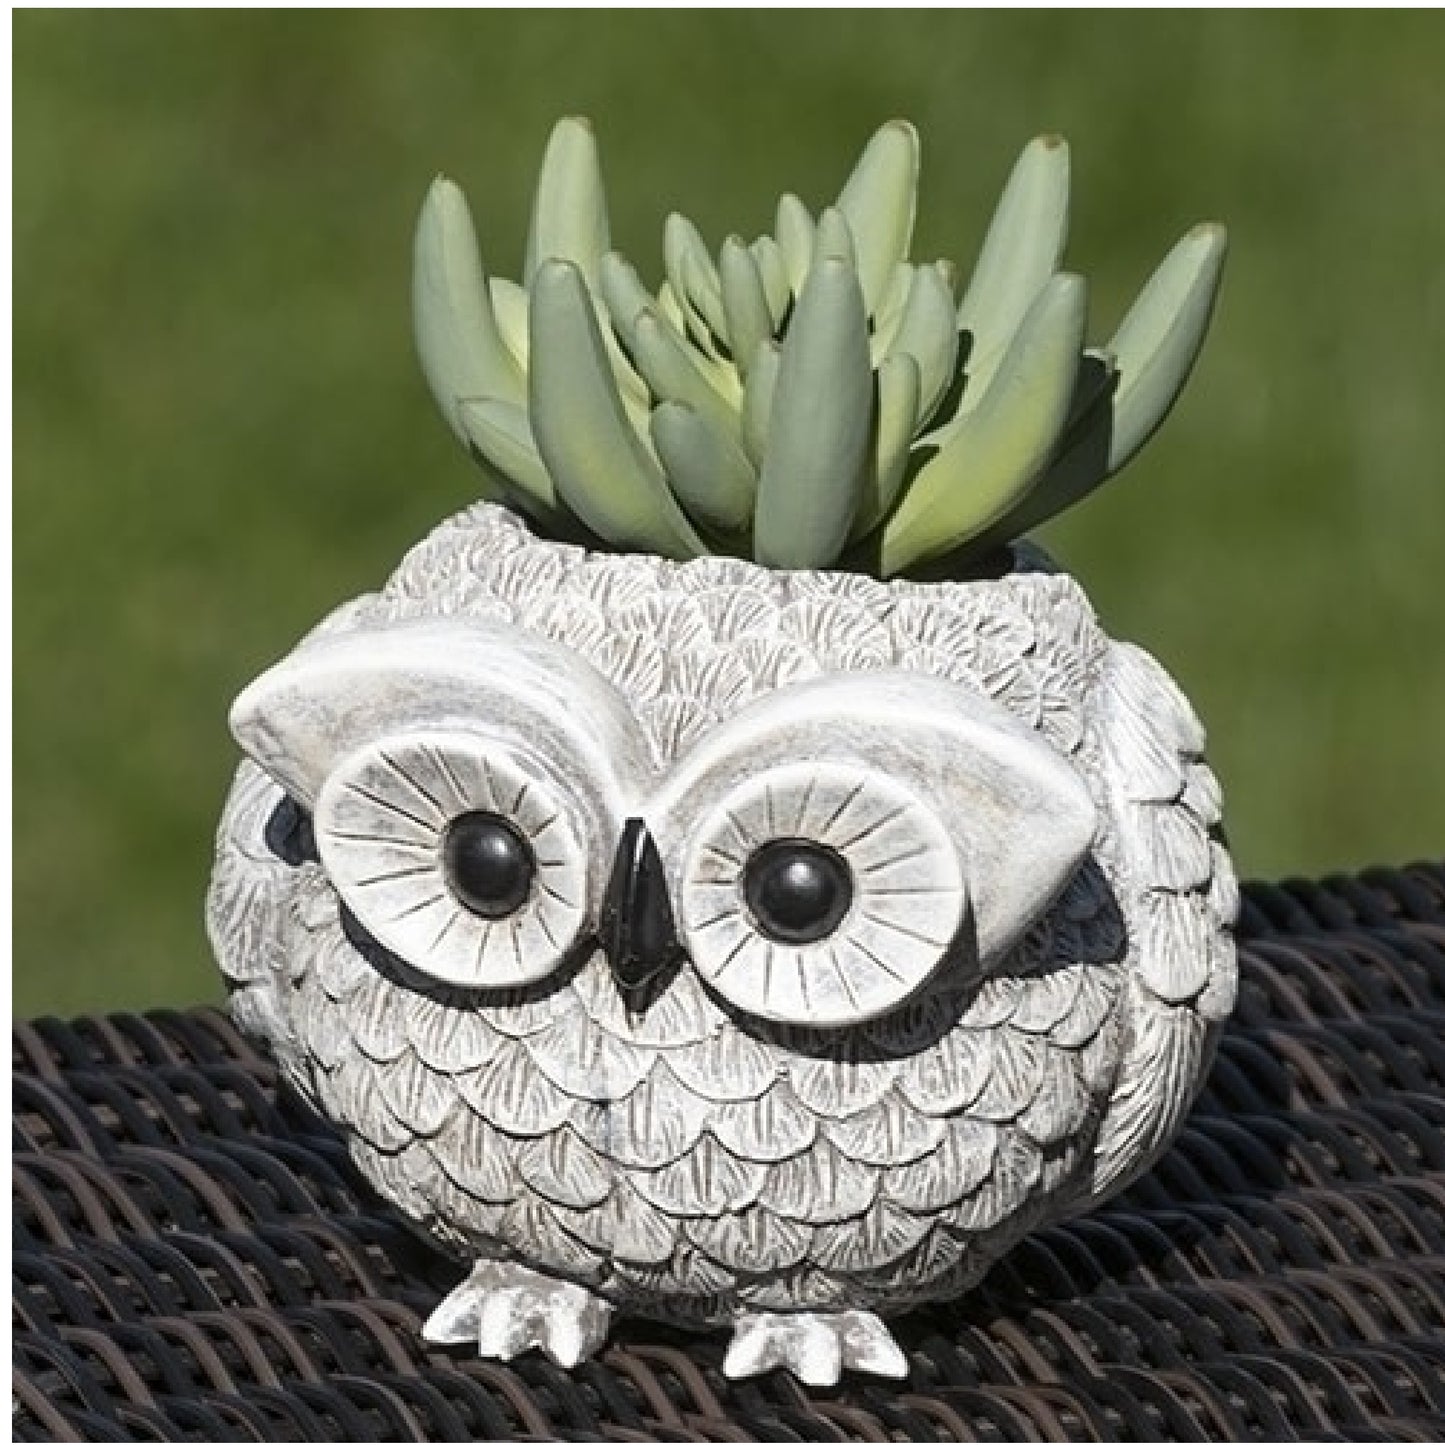 Roman Mini 3.5" Pudgy Owl Garden Planter